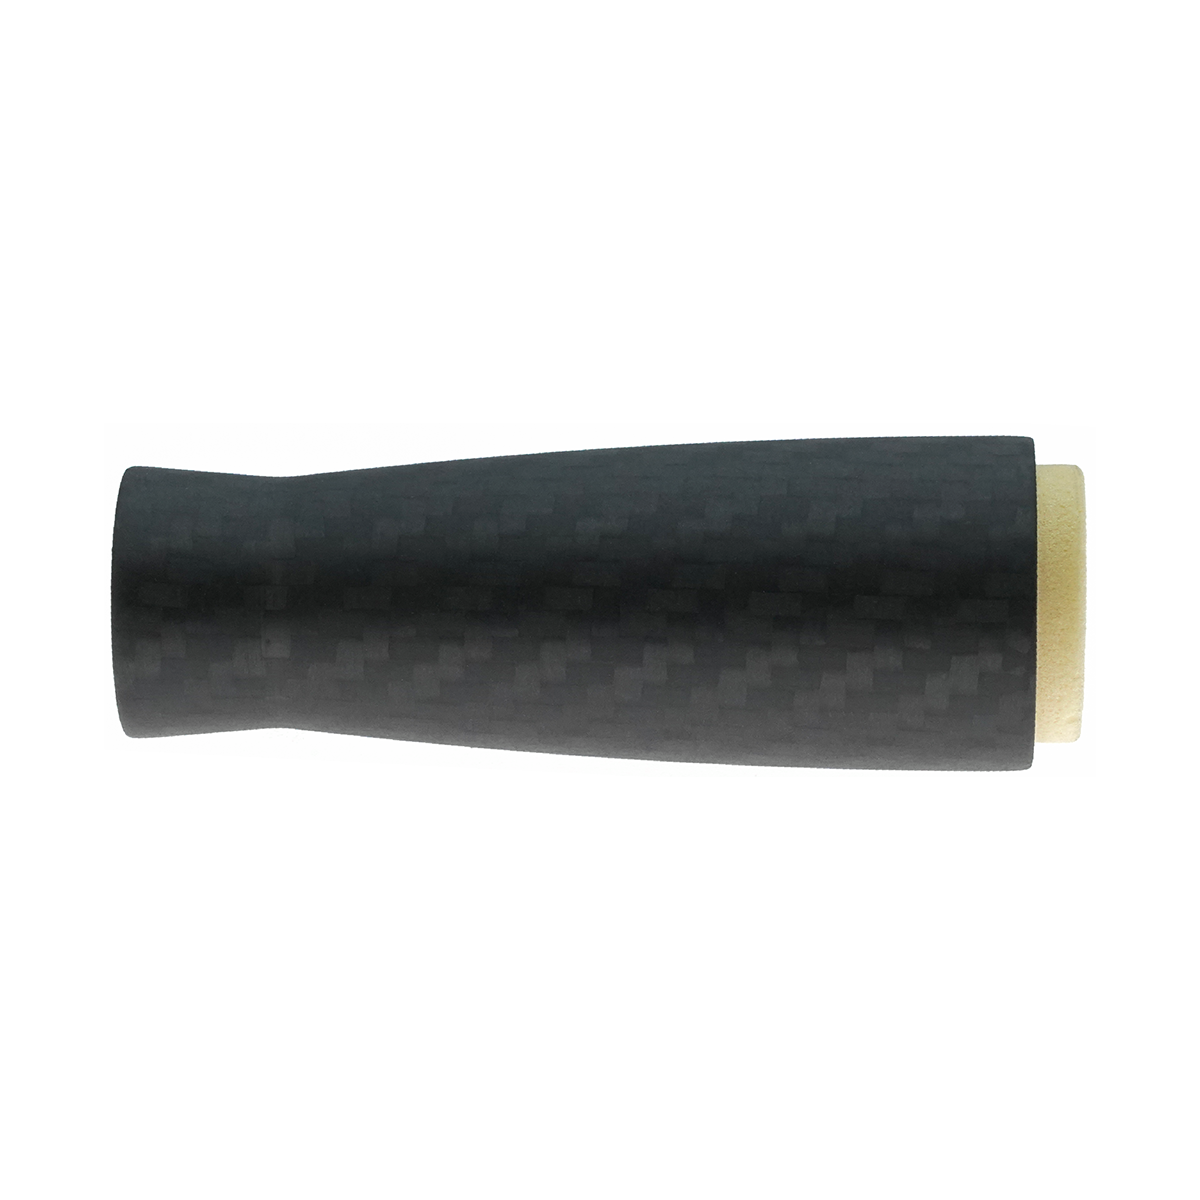 Seaguide Carbon Fiber rear grip Soft Touch